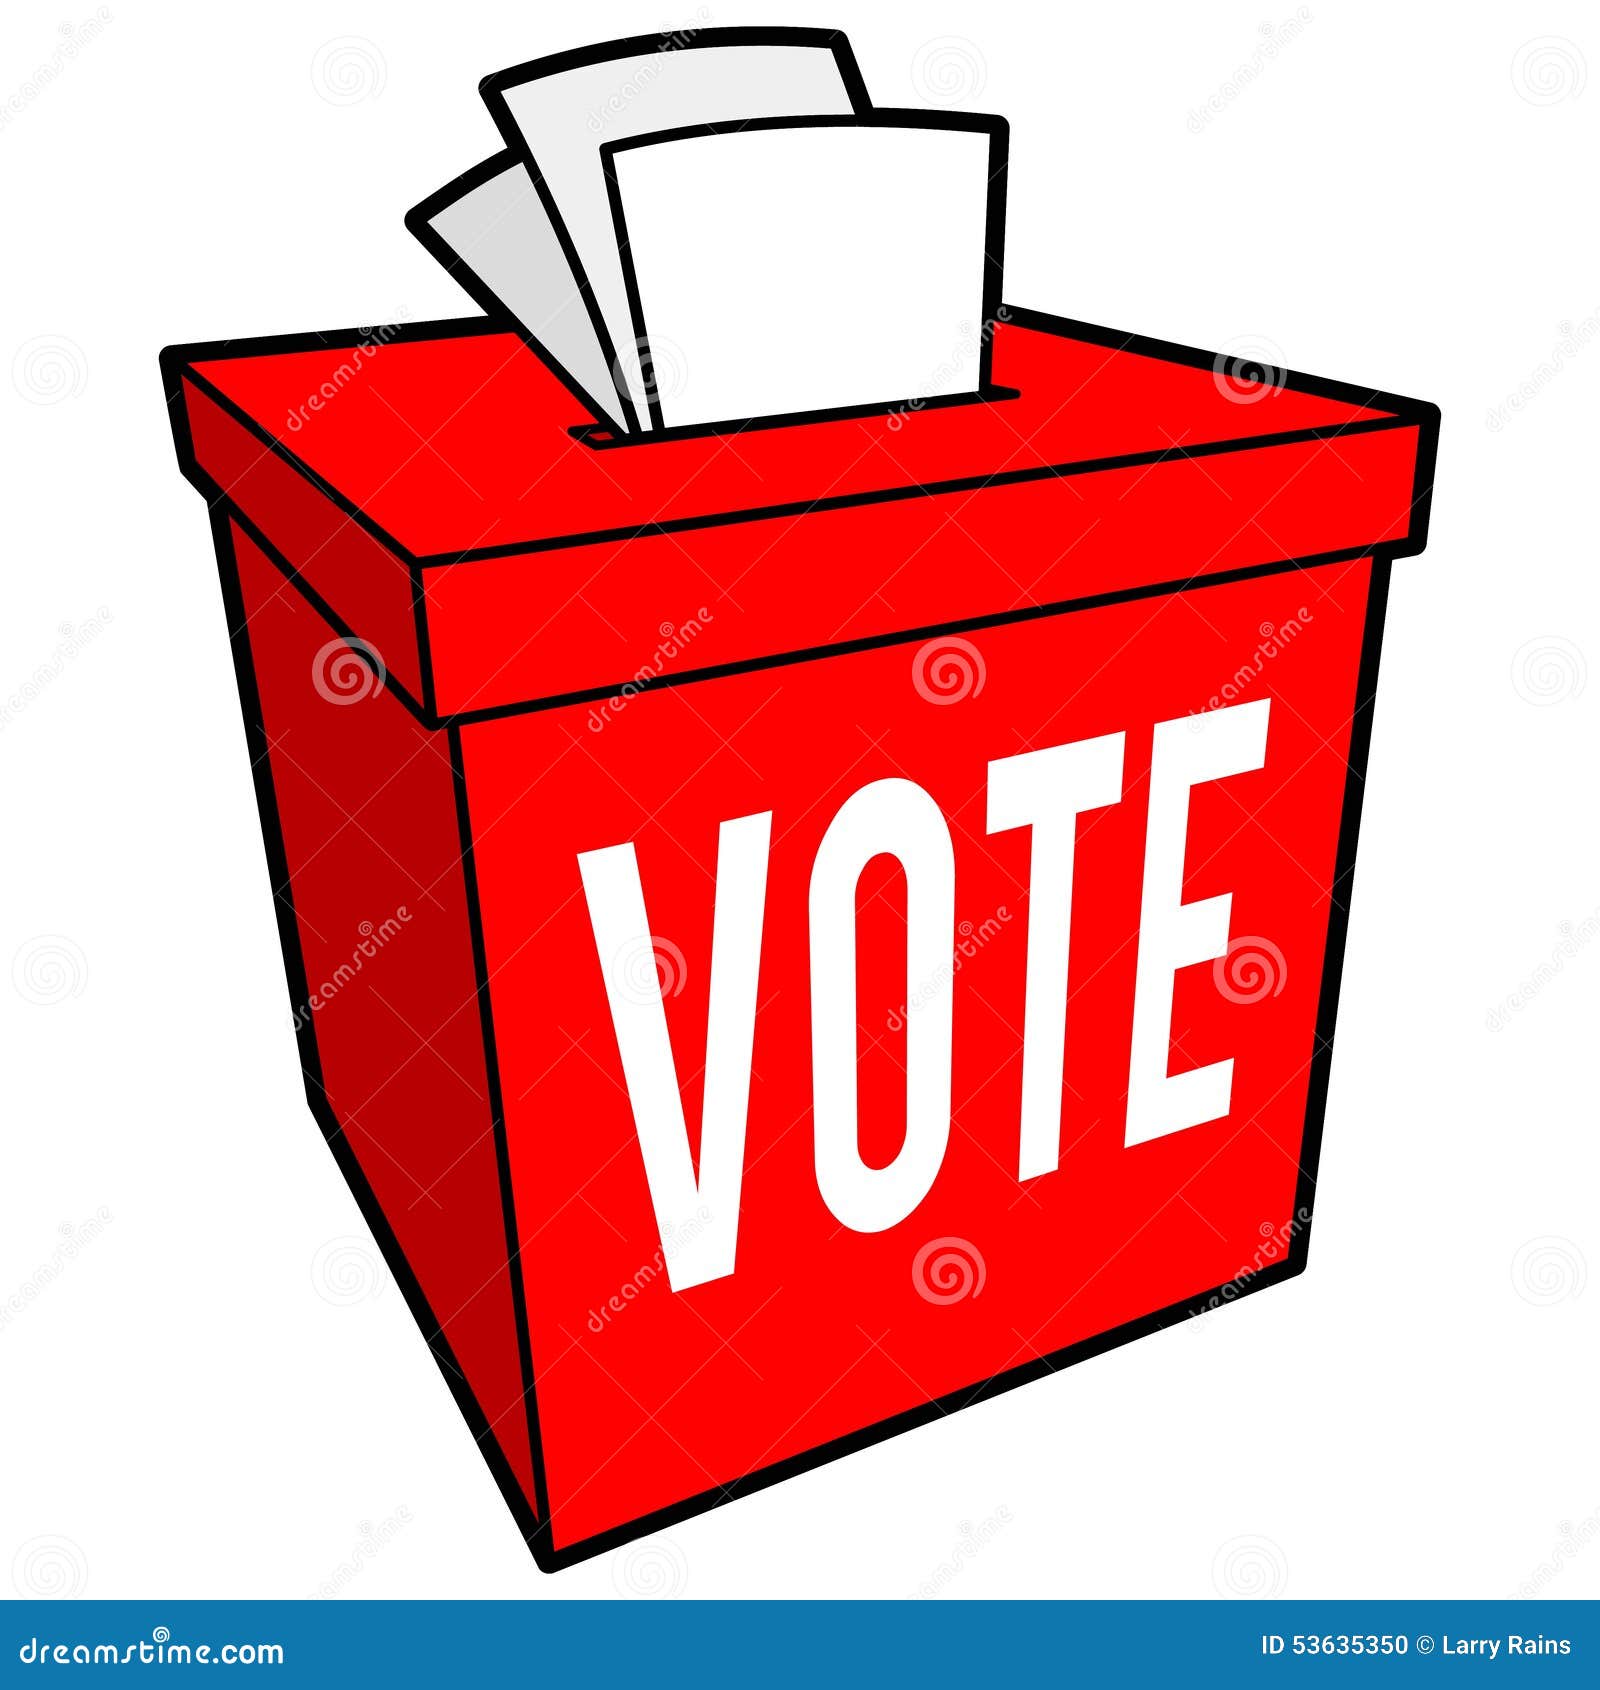 free clipart voting box - photo #37